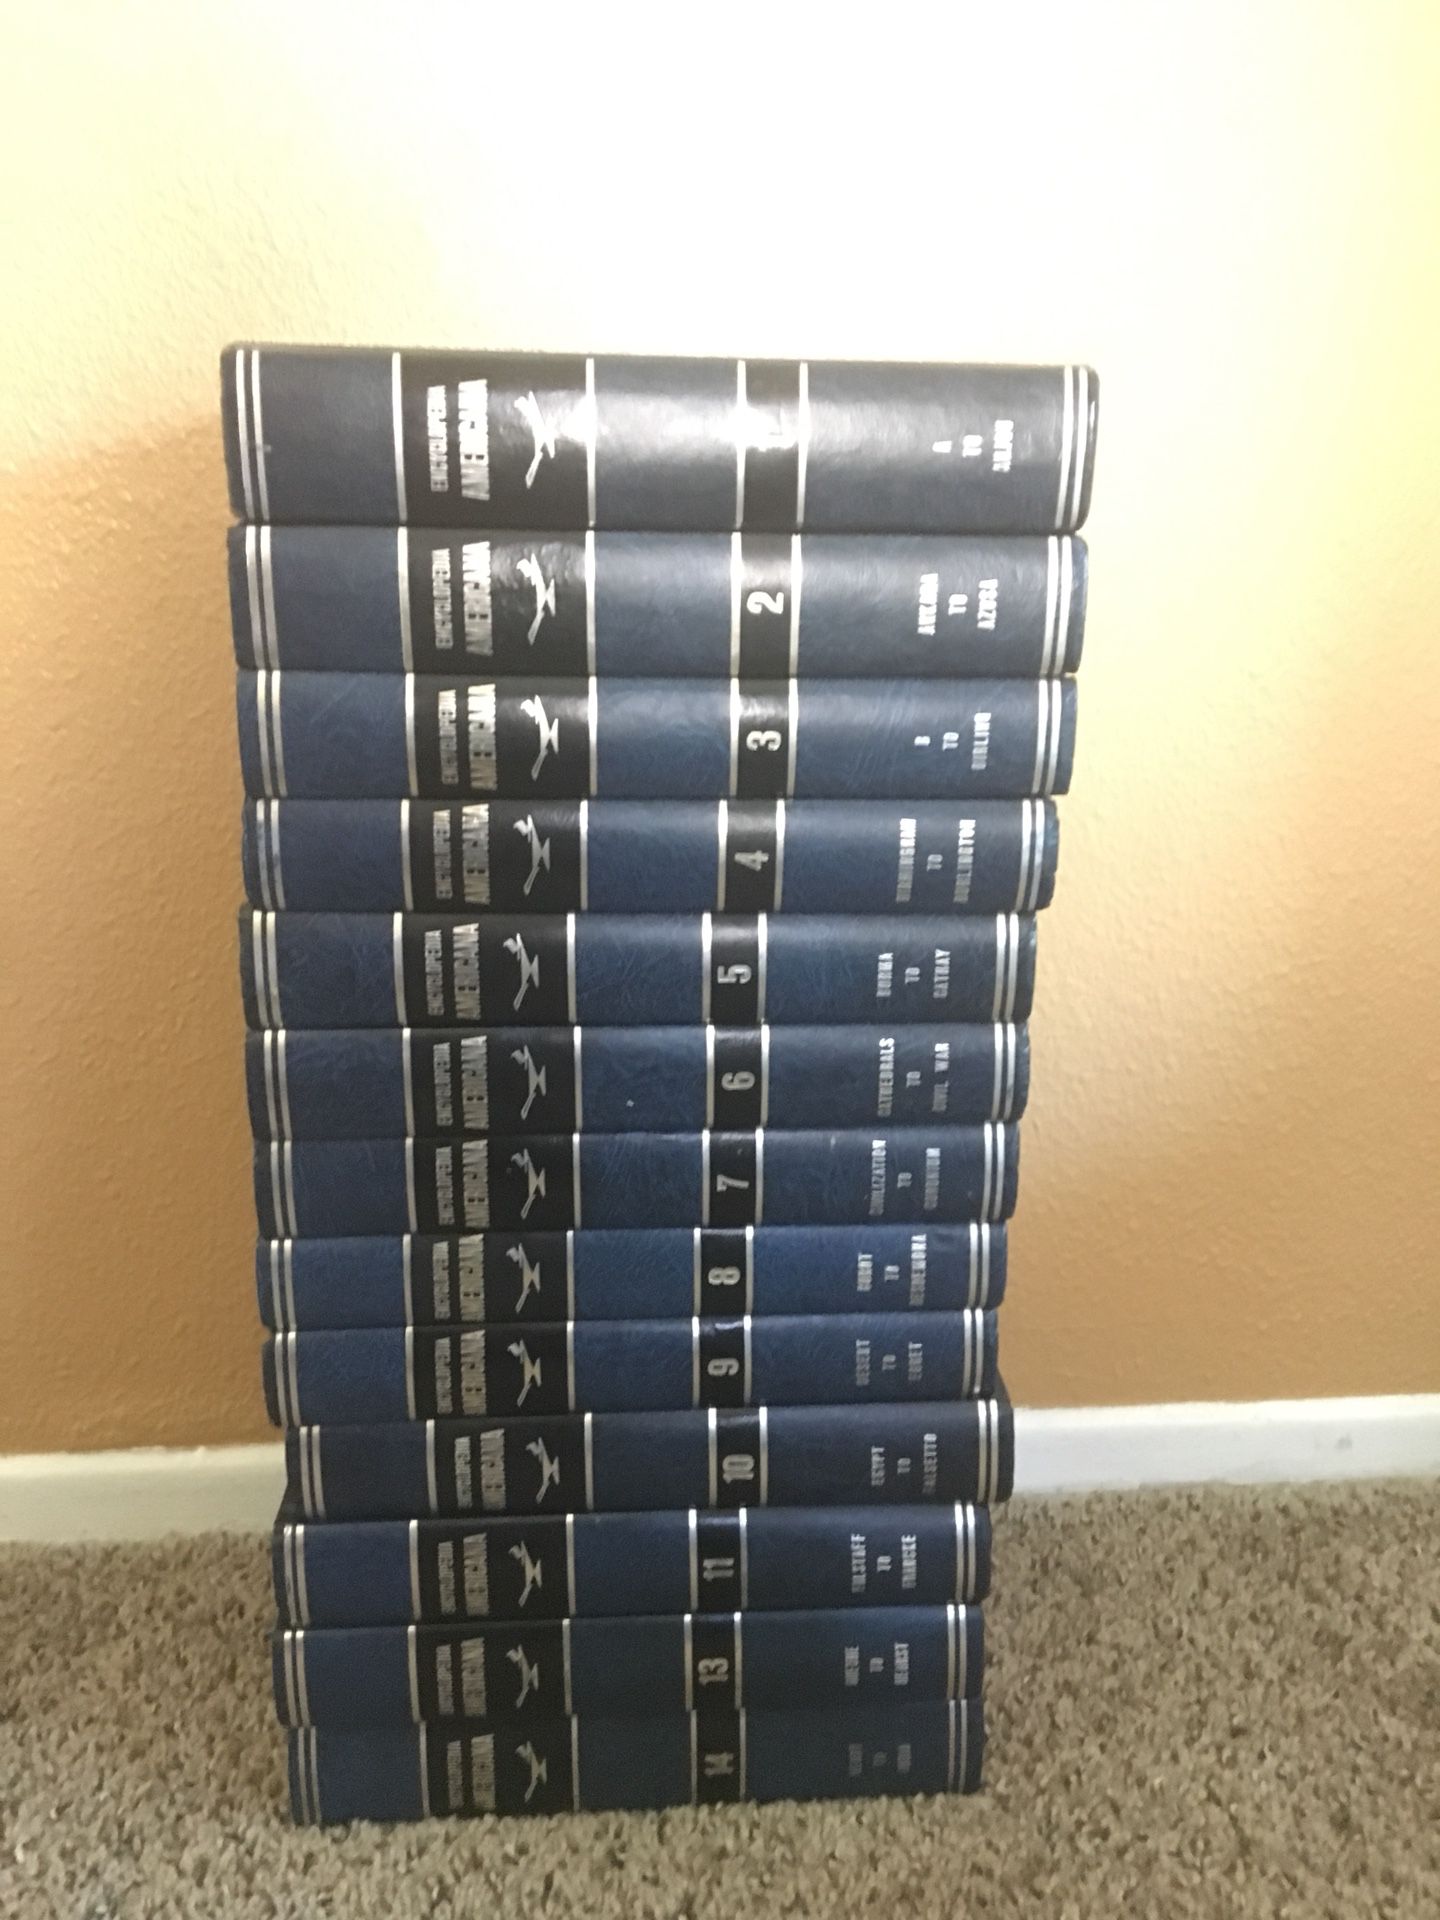 Encyclopedia - old books